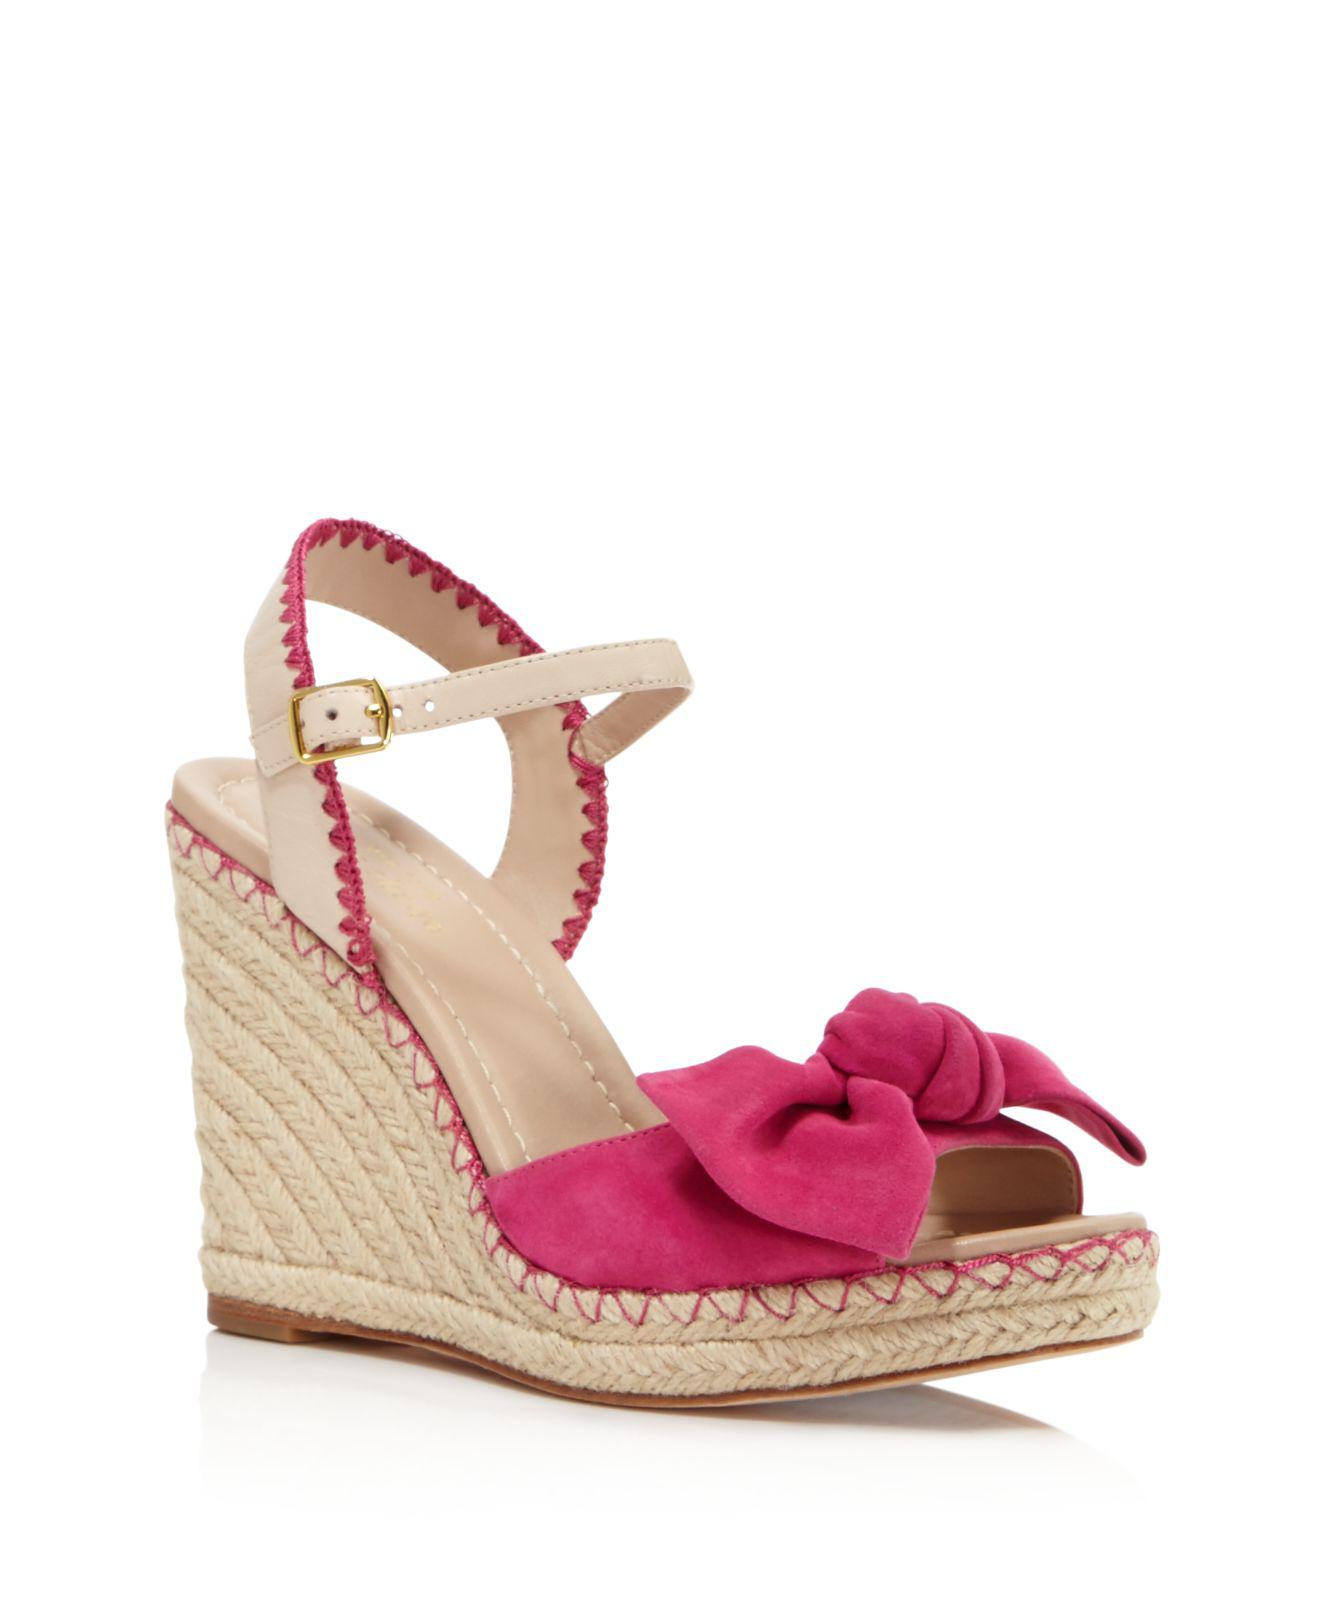 Lyst - Kate Spade Jane Espadrille Platform Wedge Sandals in Pink